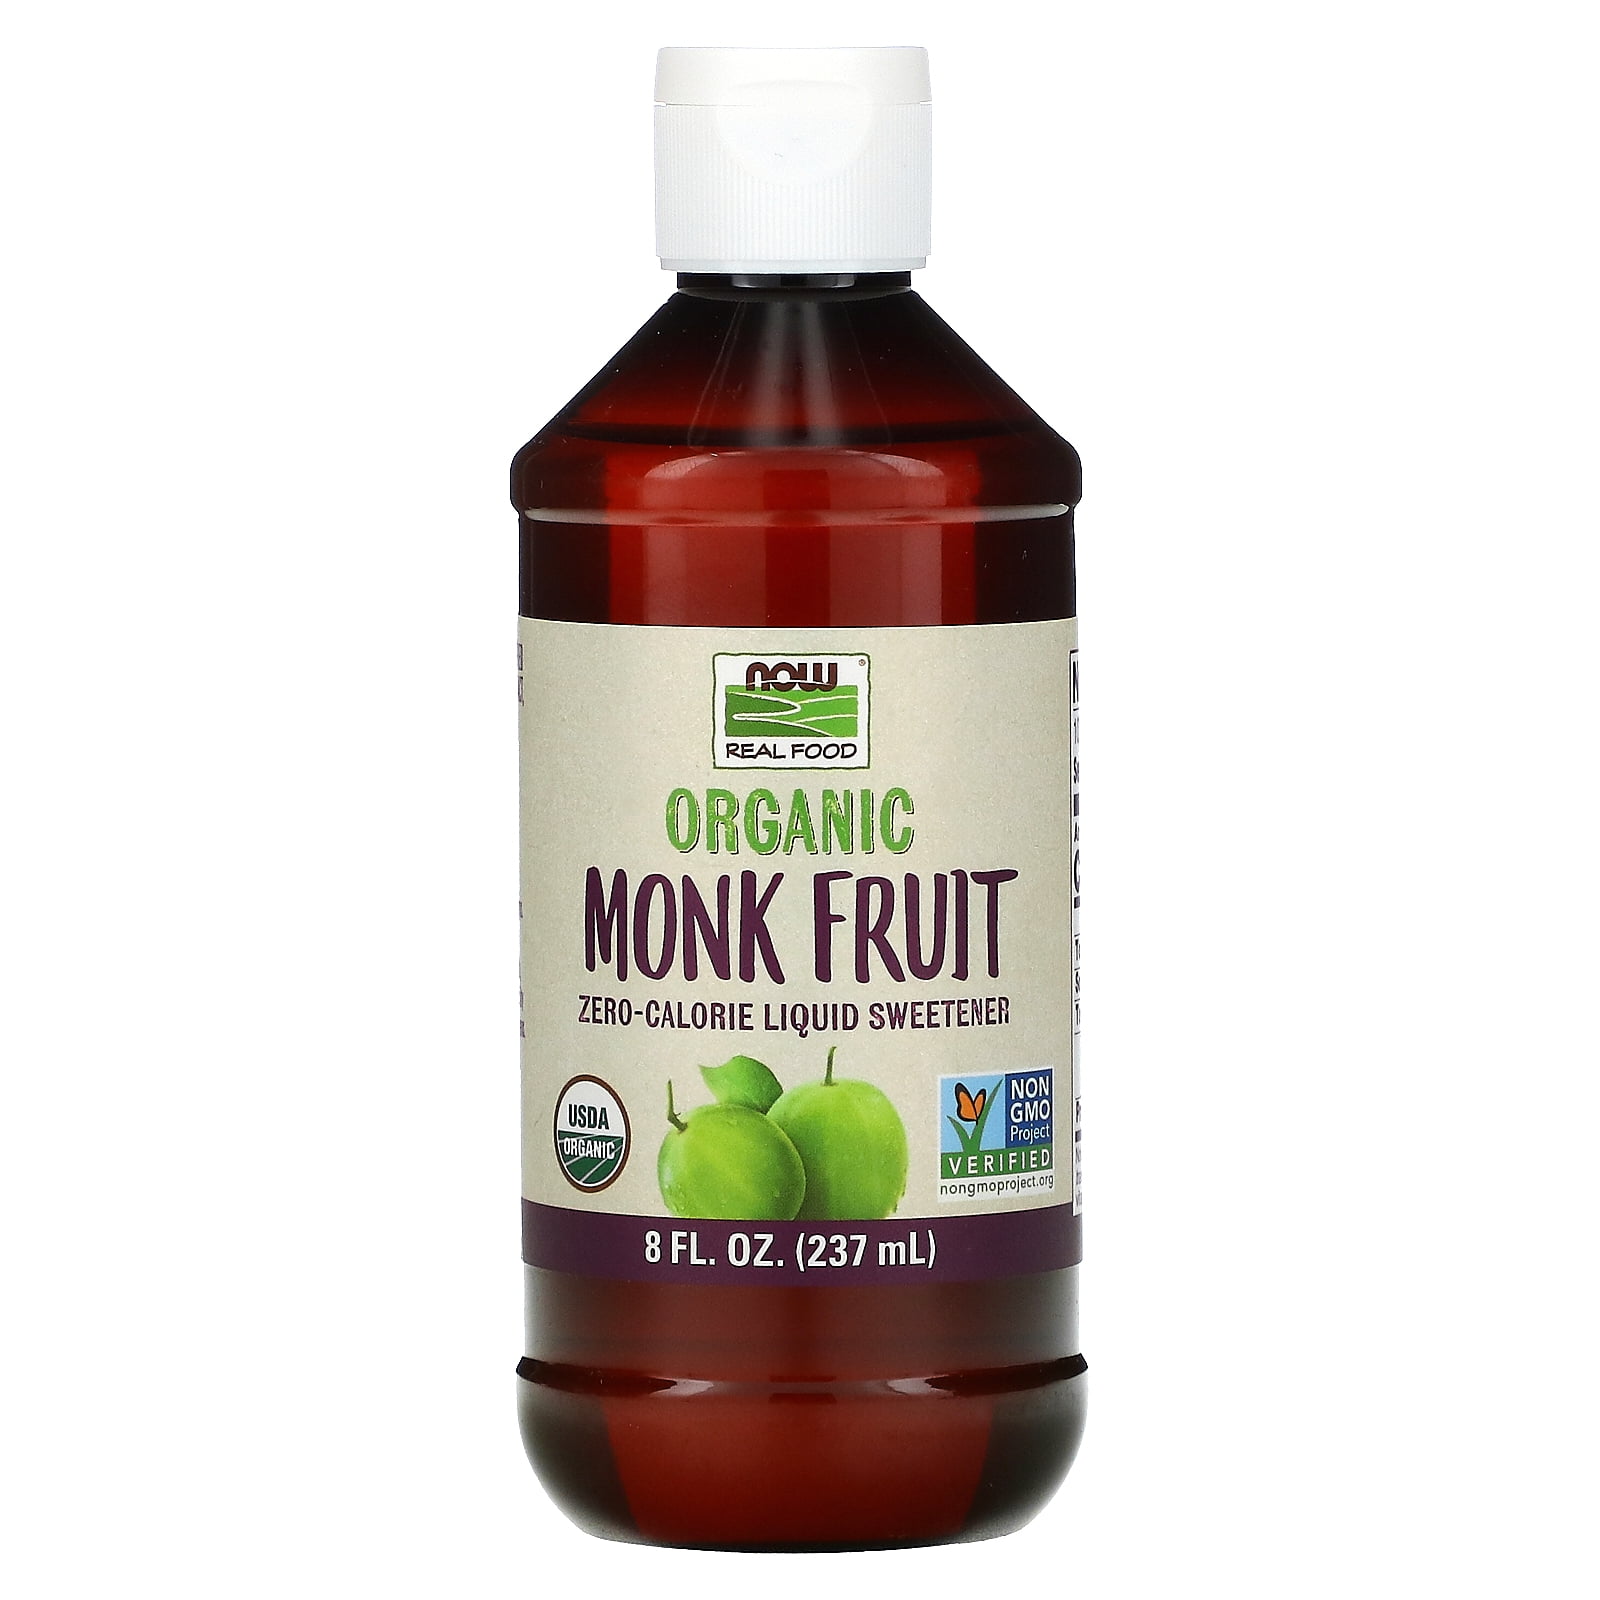 Pure Monk Fruit, 3.5 oz (100 g), Julian Bakery - Walmart.com